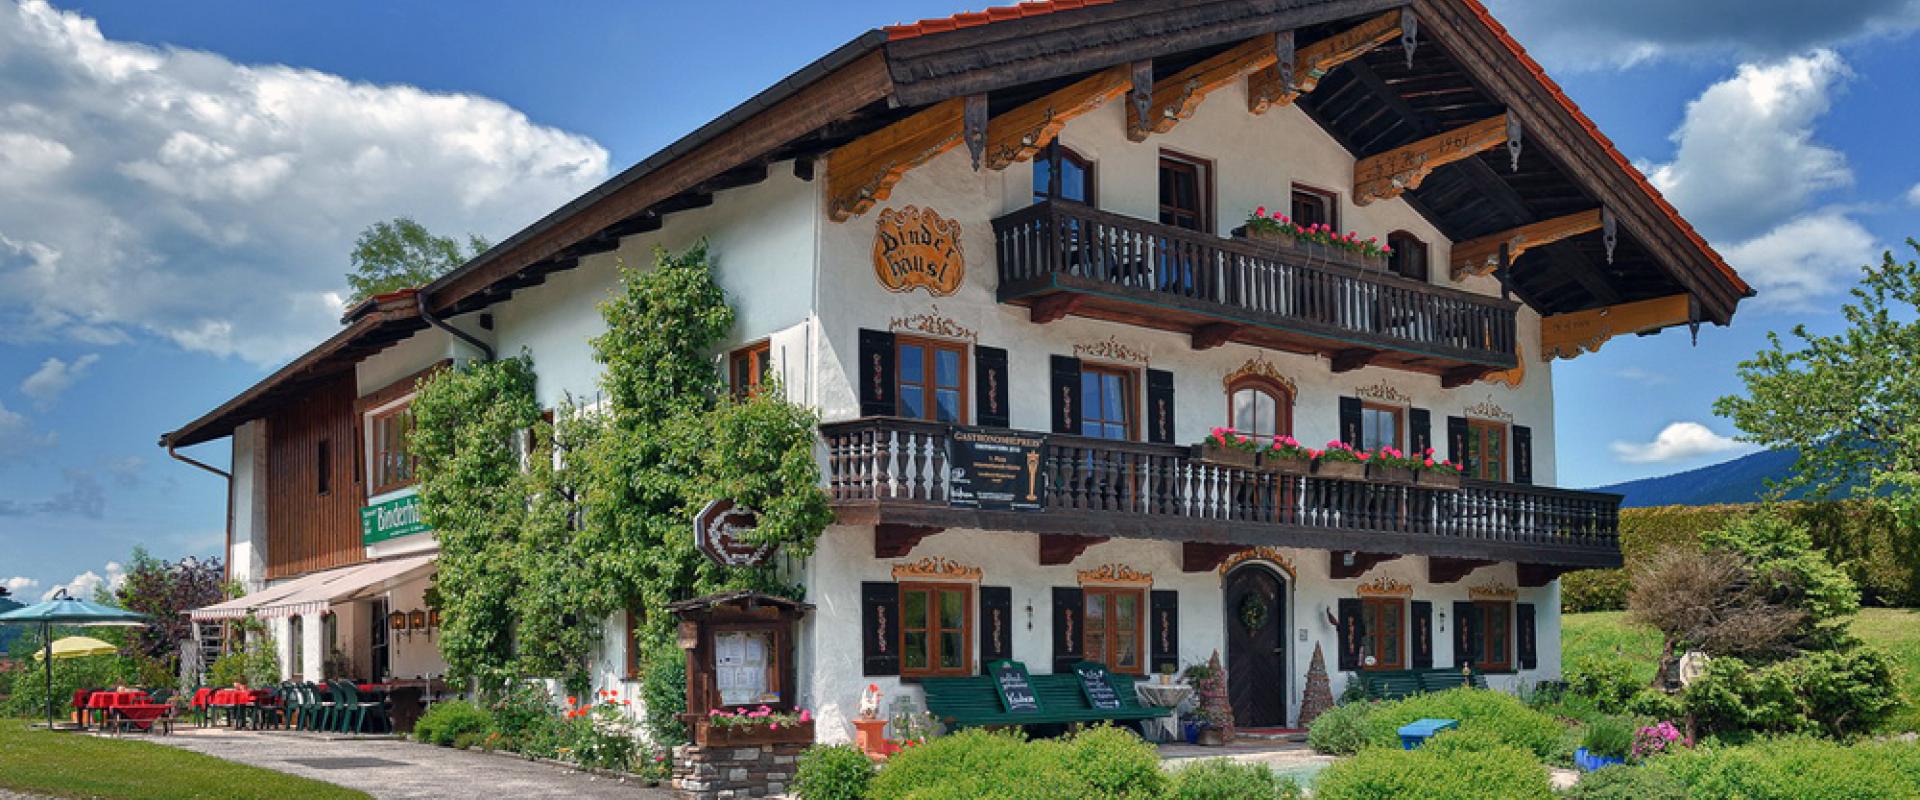 15641 Motorrad Hotel Binderhäusl in Oberbayern.jpg